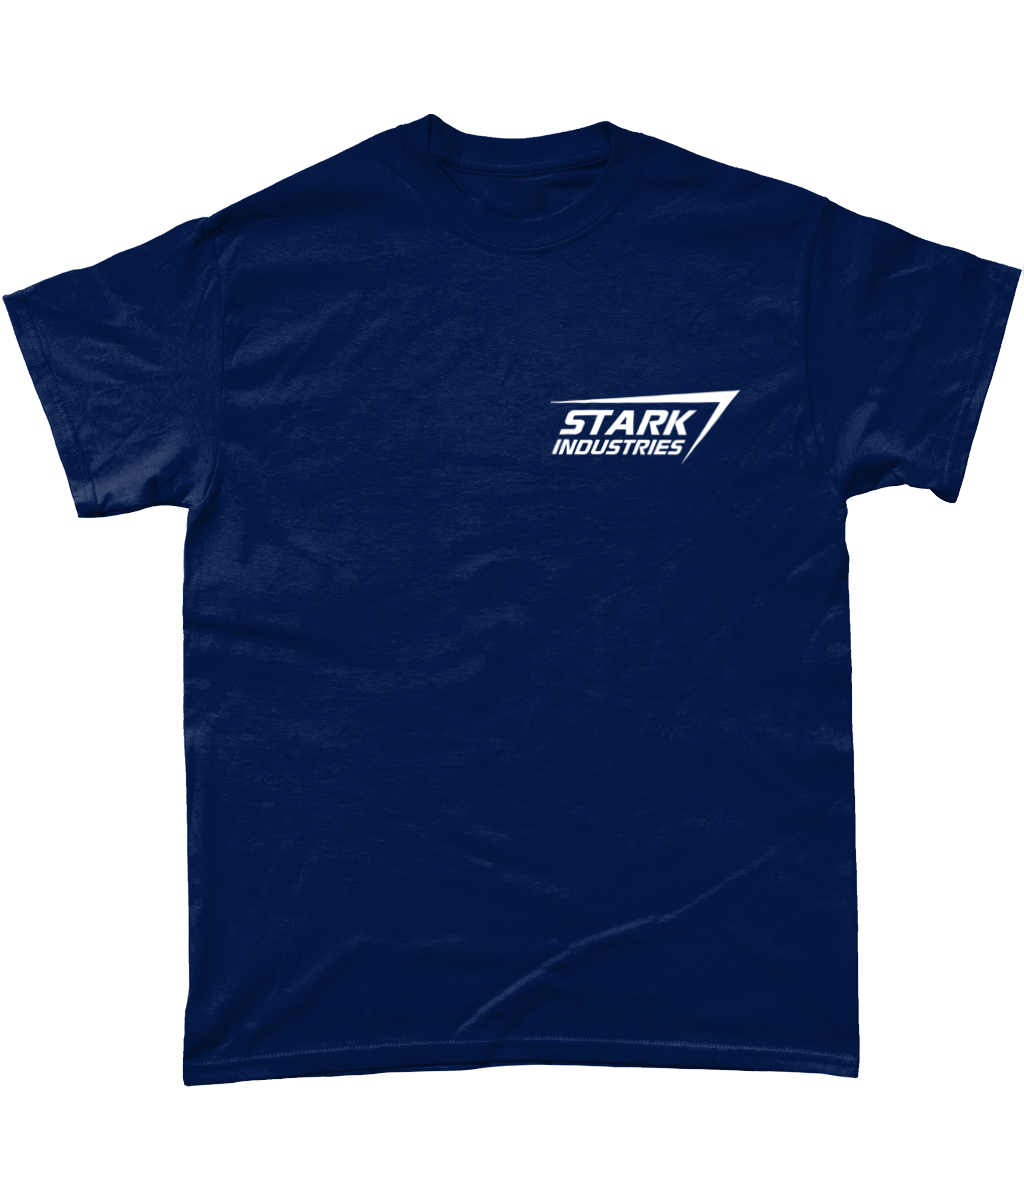 stark Industries t-shirt